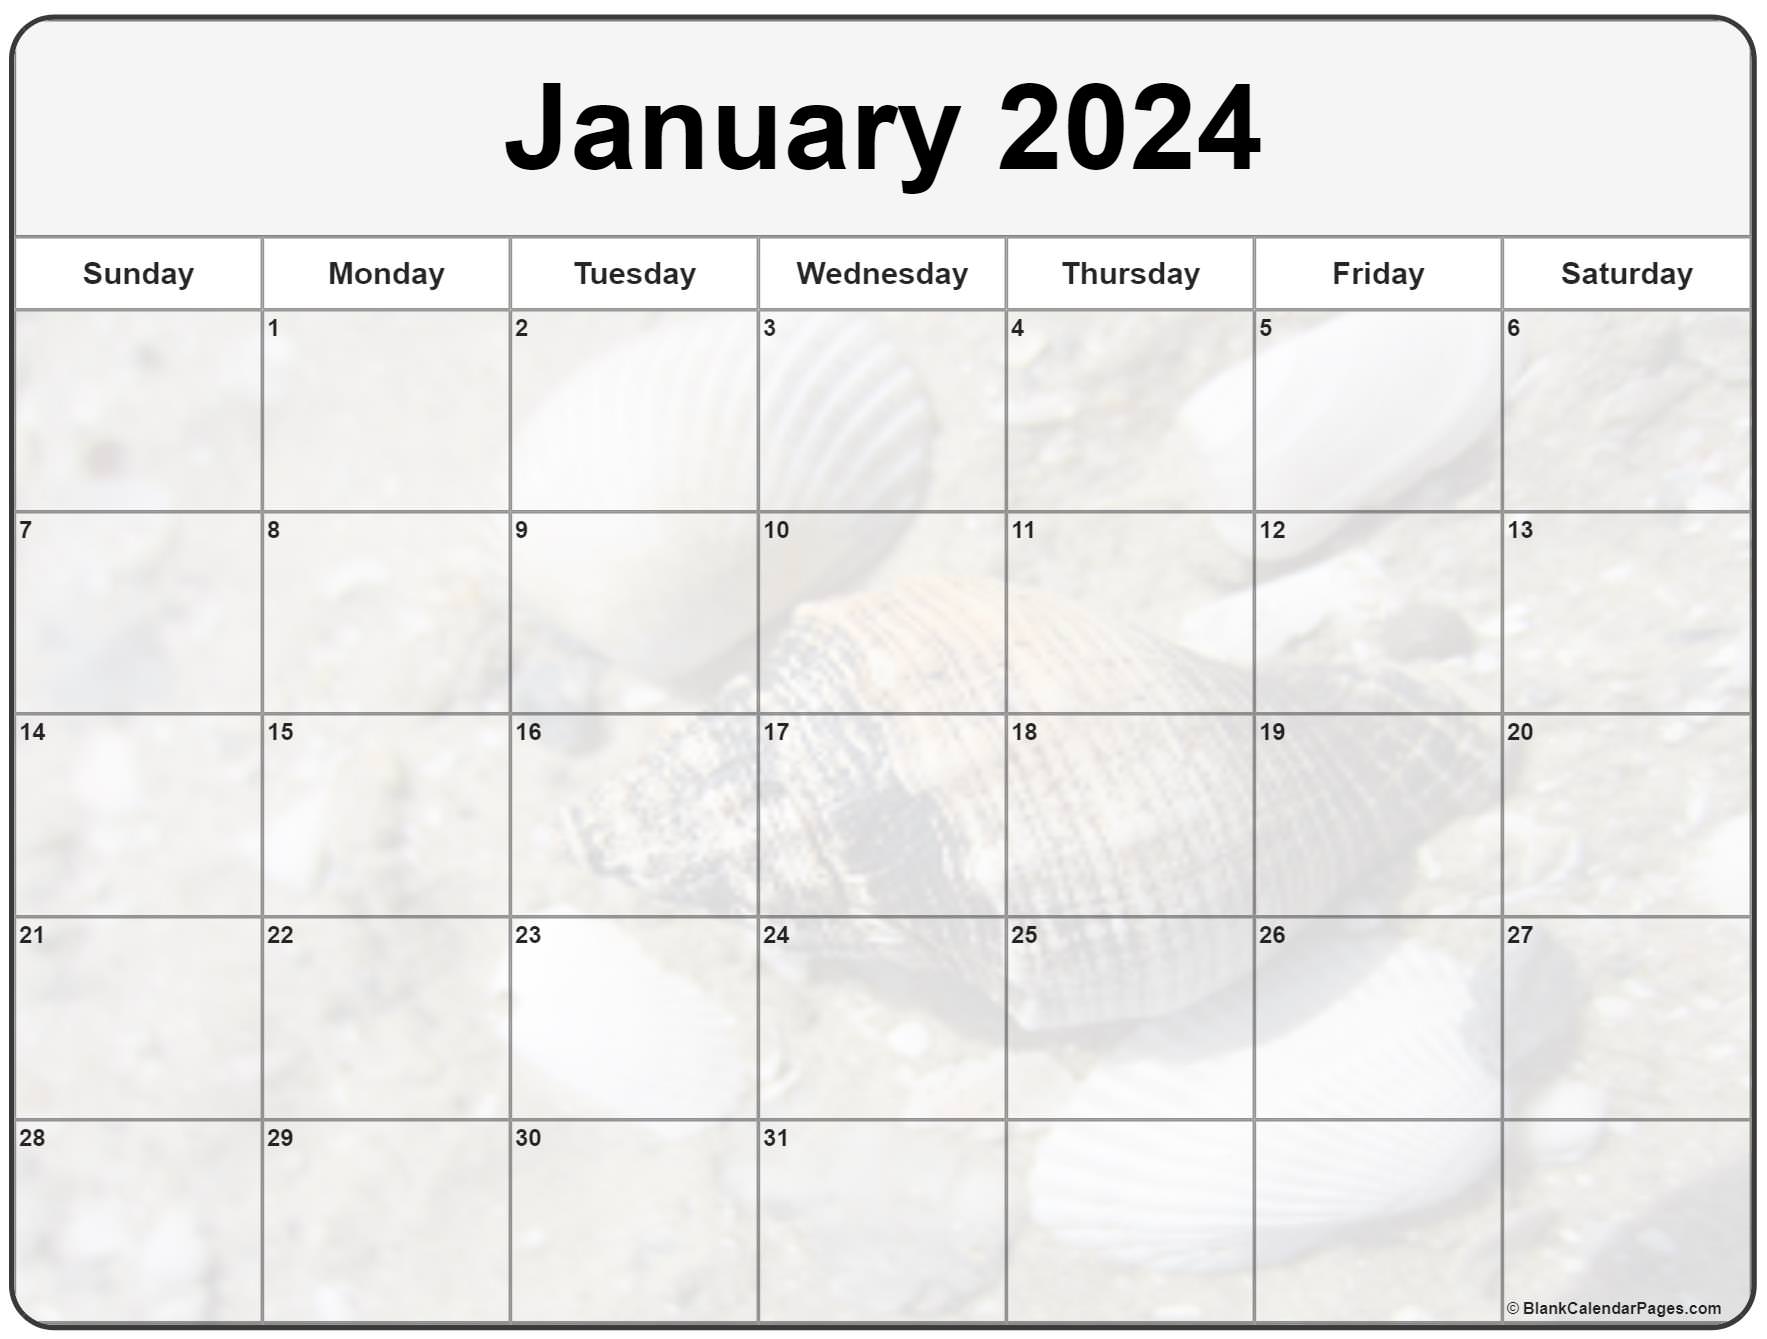 Google Calendar January 2024 Top The Best Famous January 2024